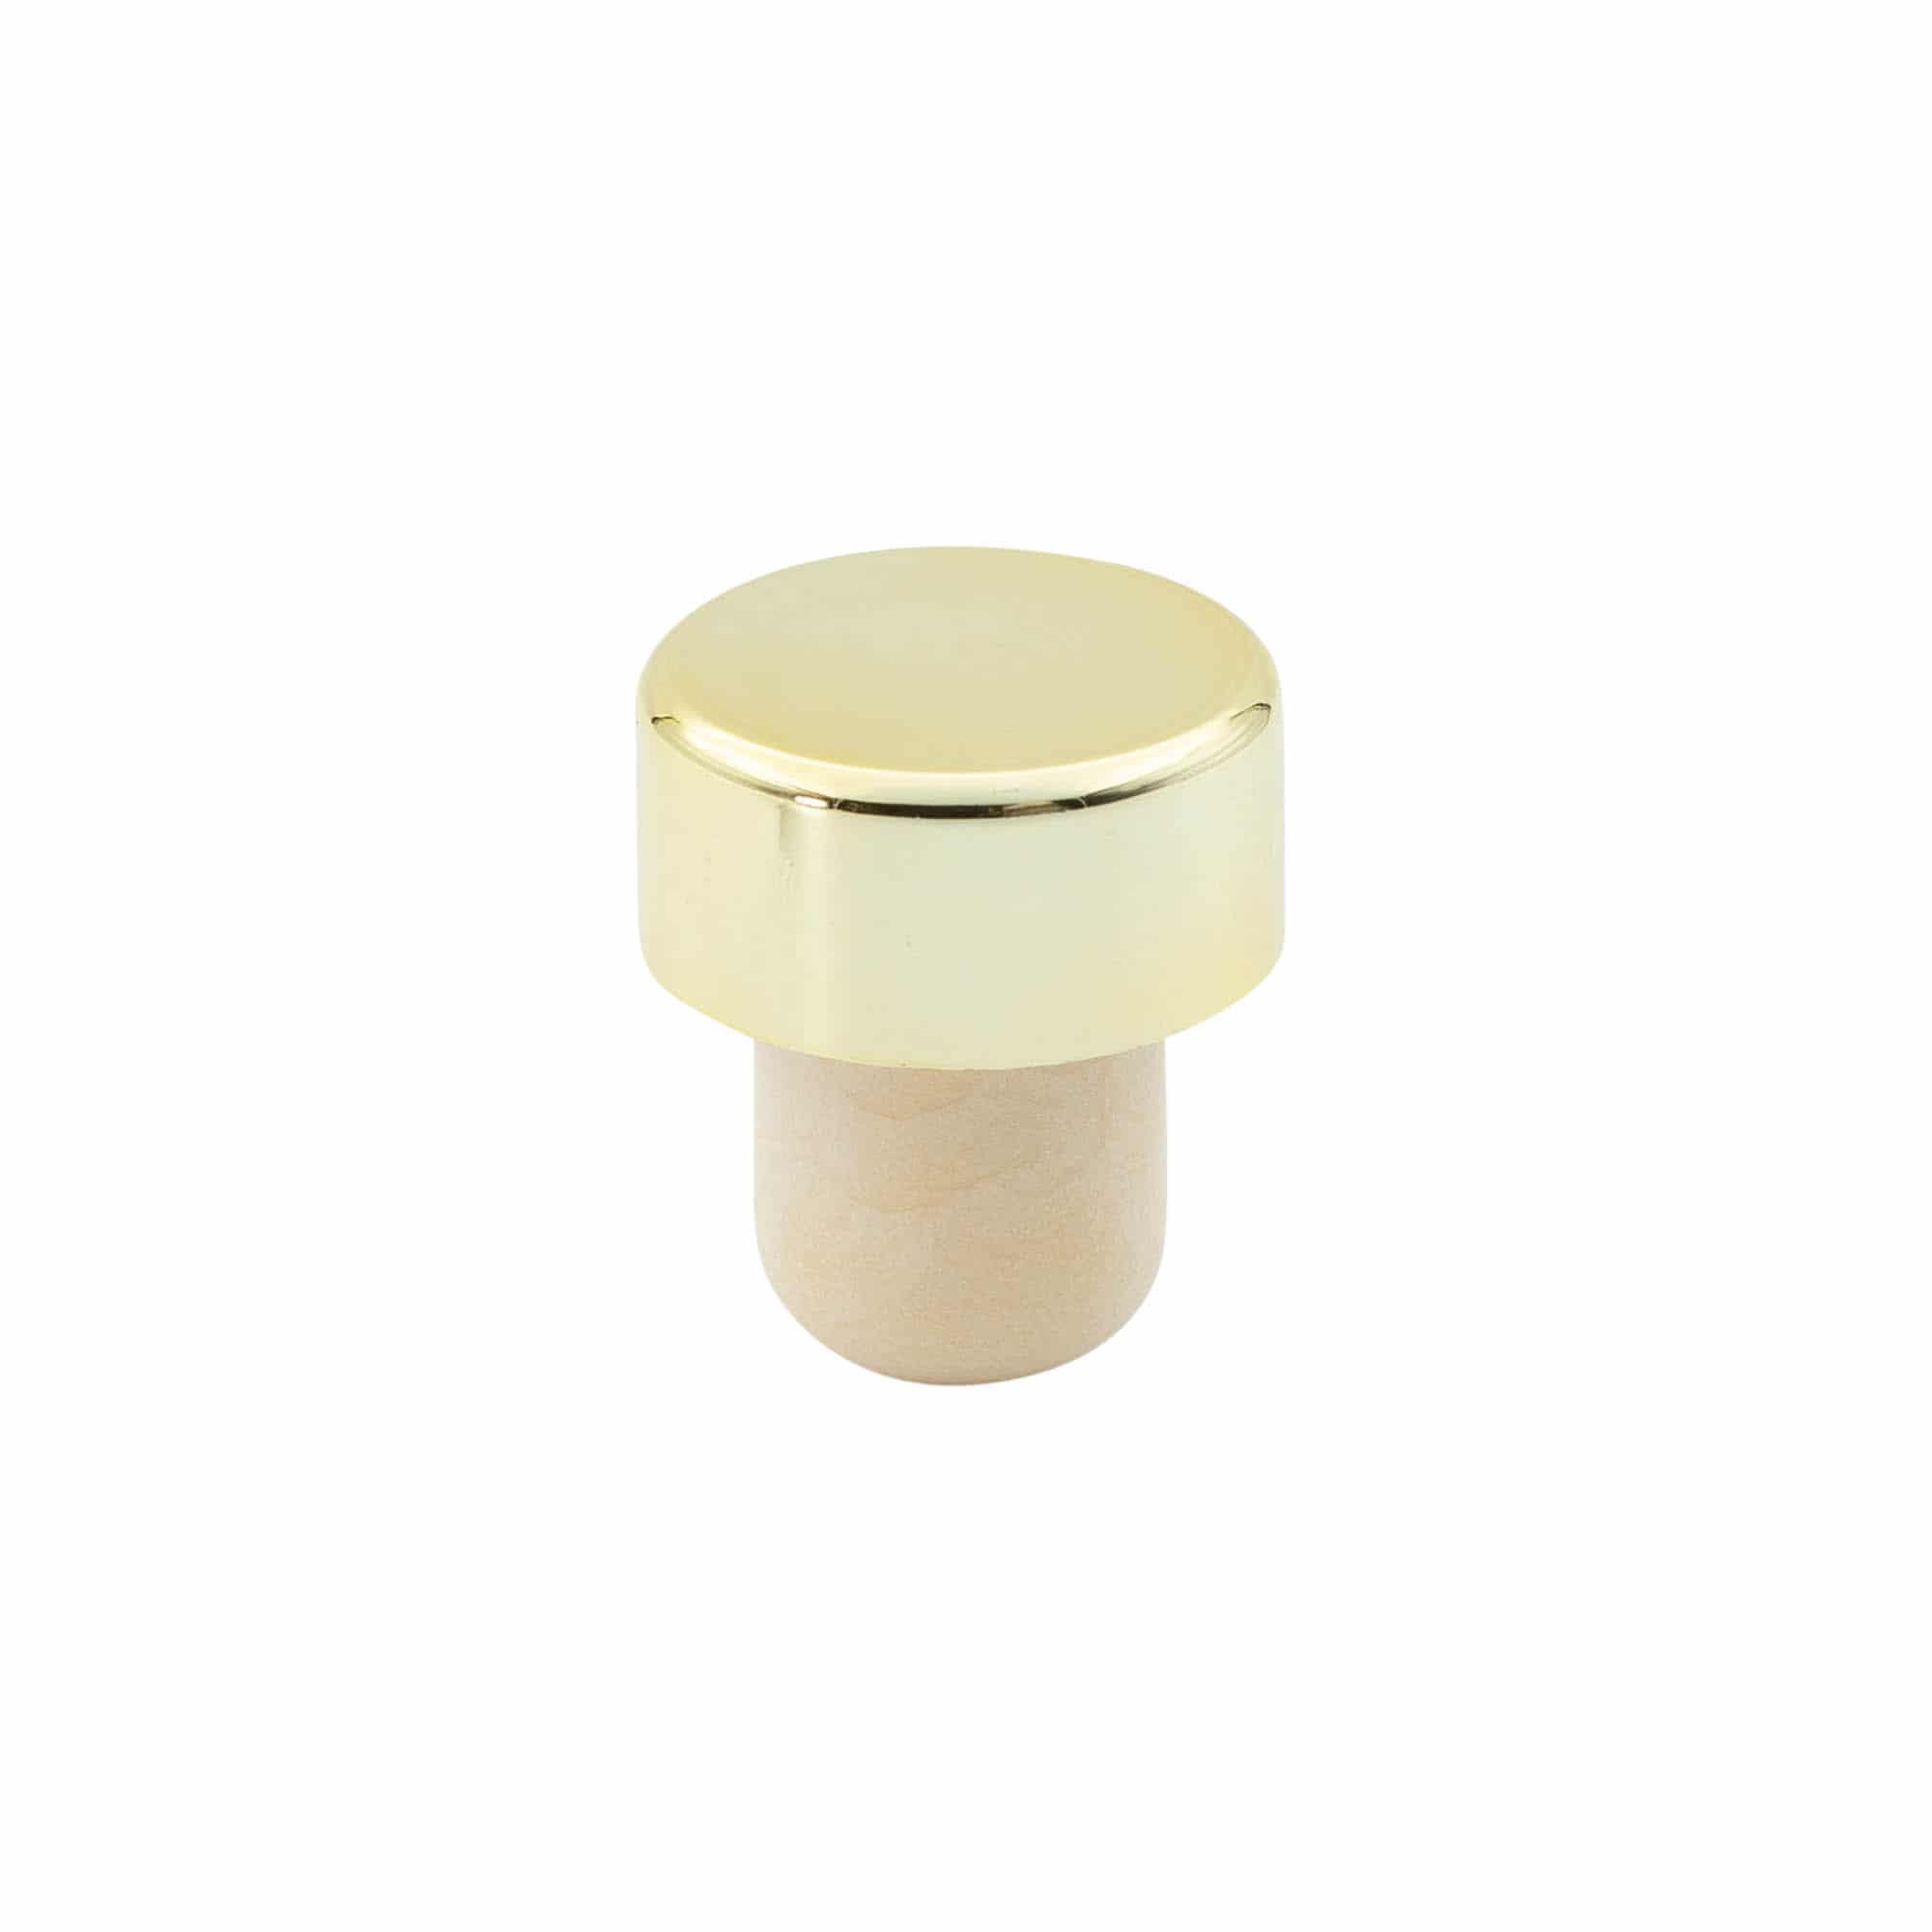 19 mm mushroom cork, plastic, gold, for opening: cork